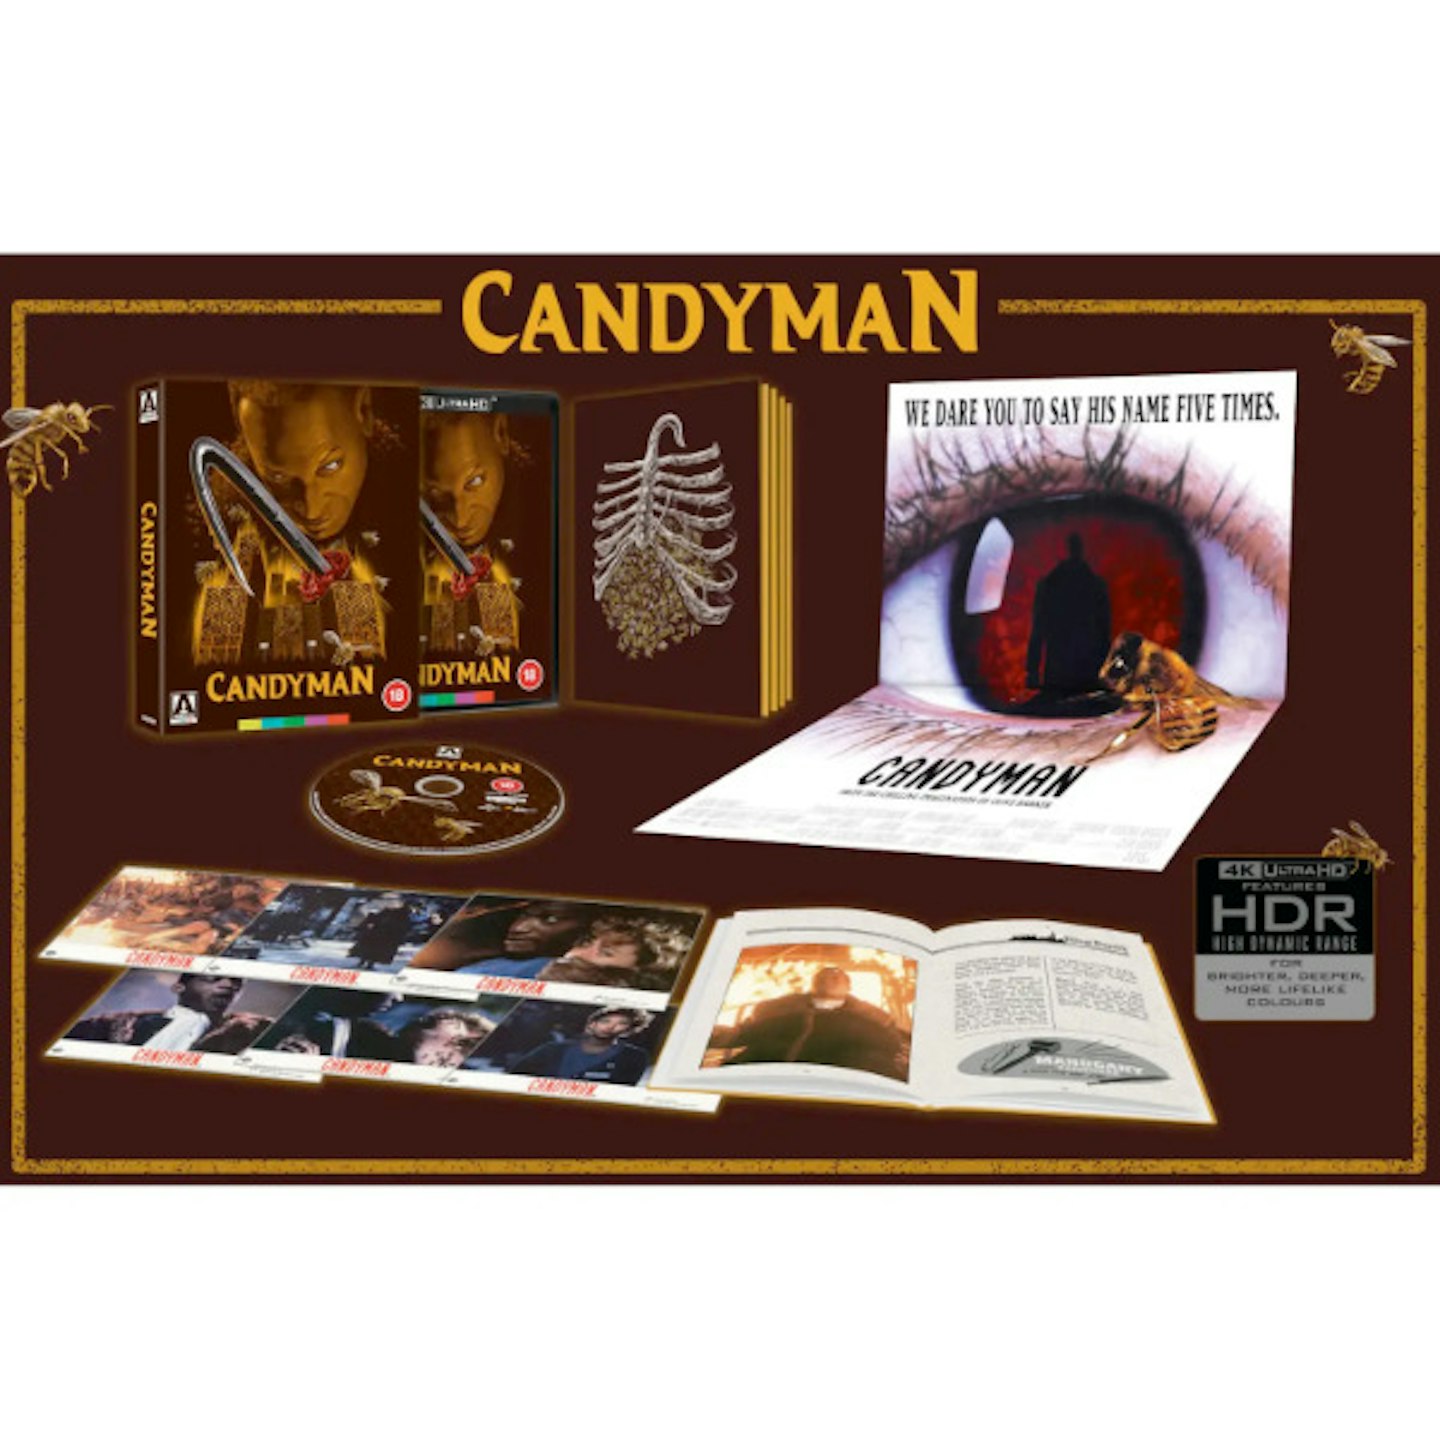 Candyman Limited Edition 4K